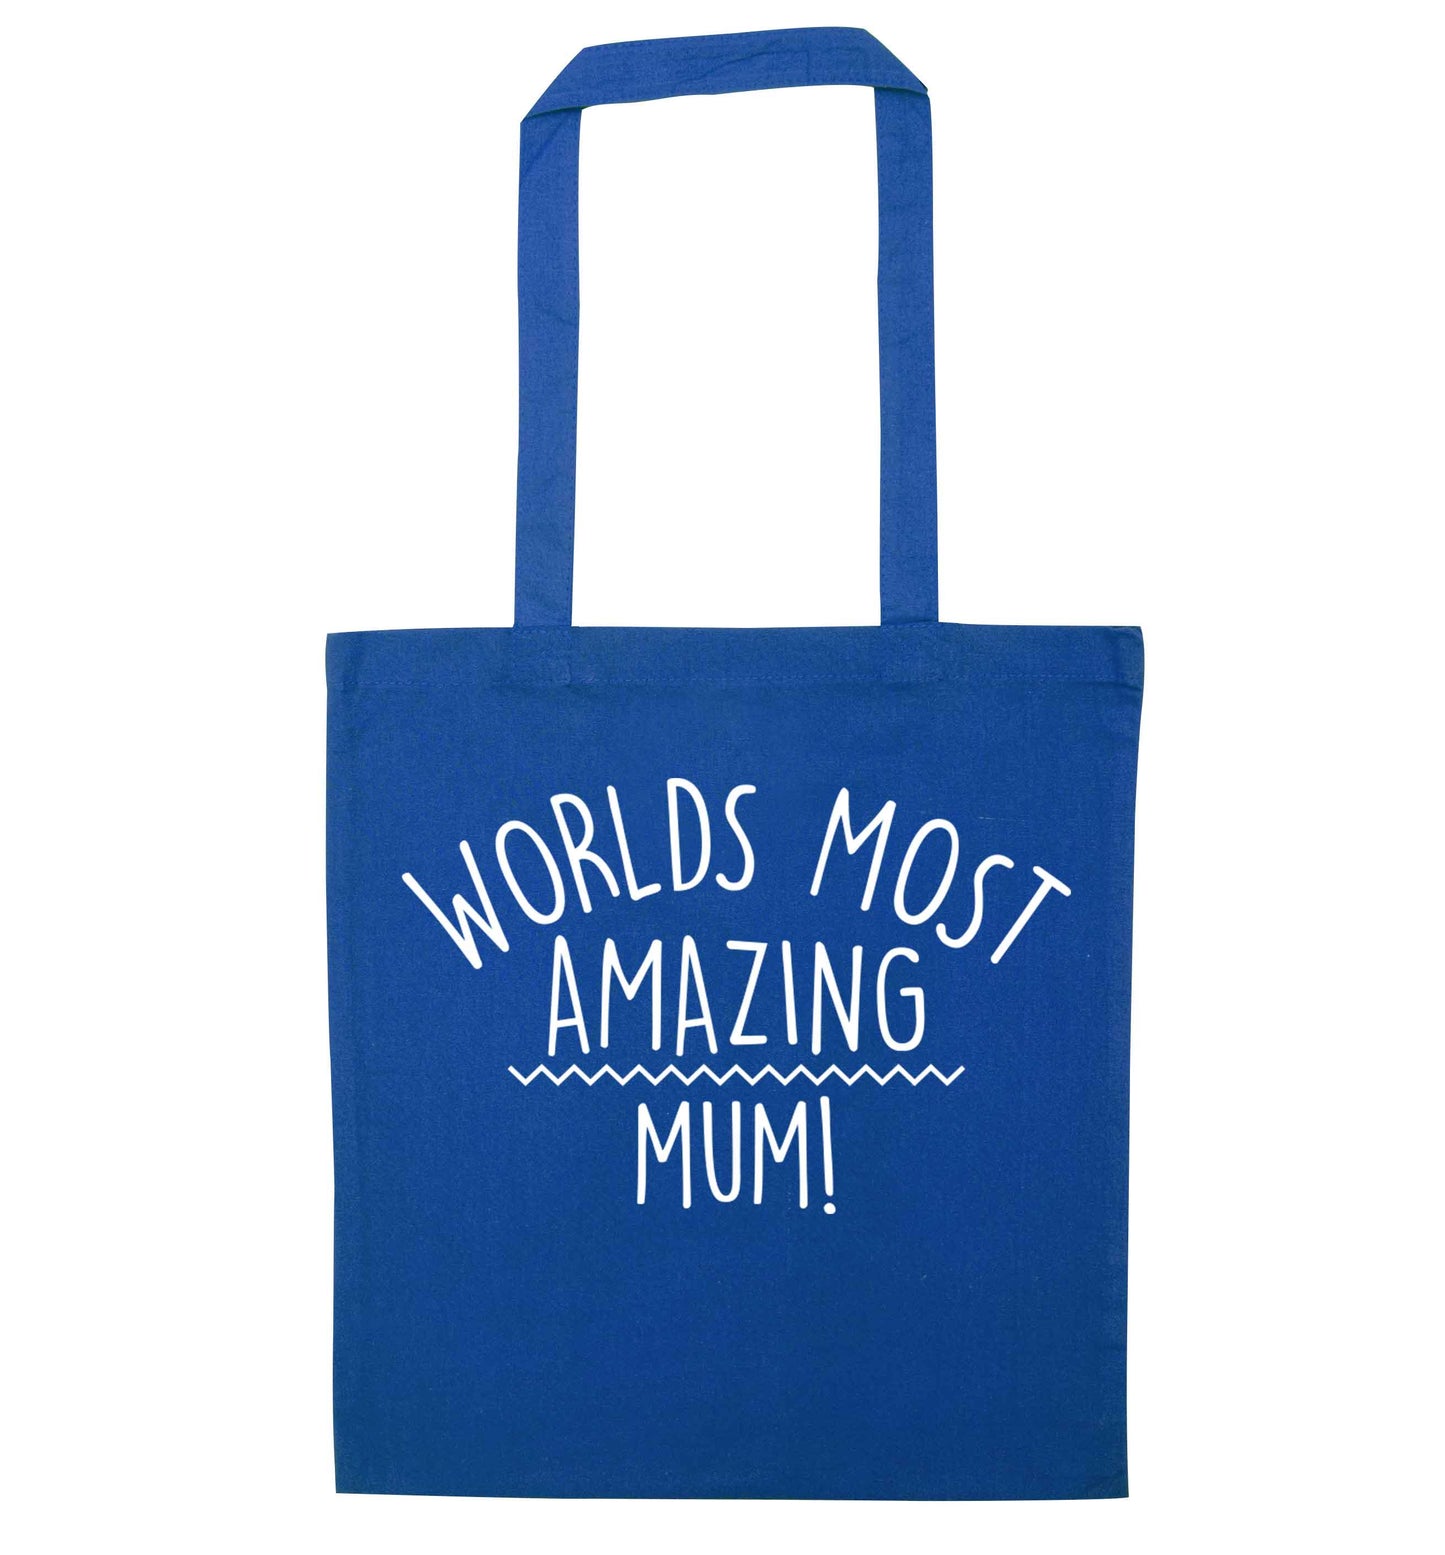 Worlds most amazing mum blue tote bag